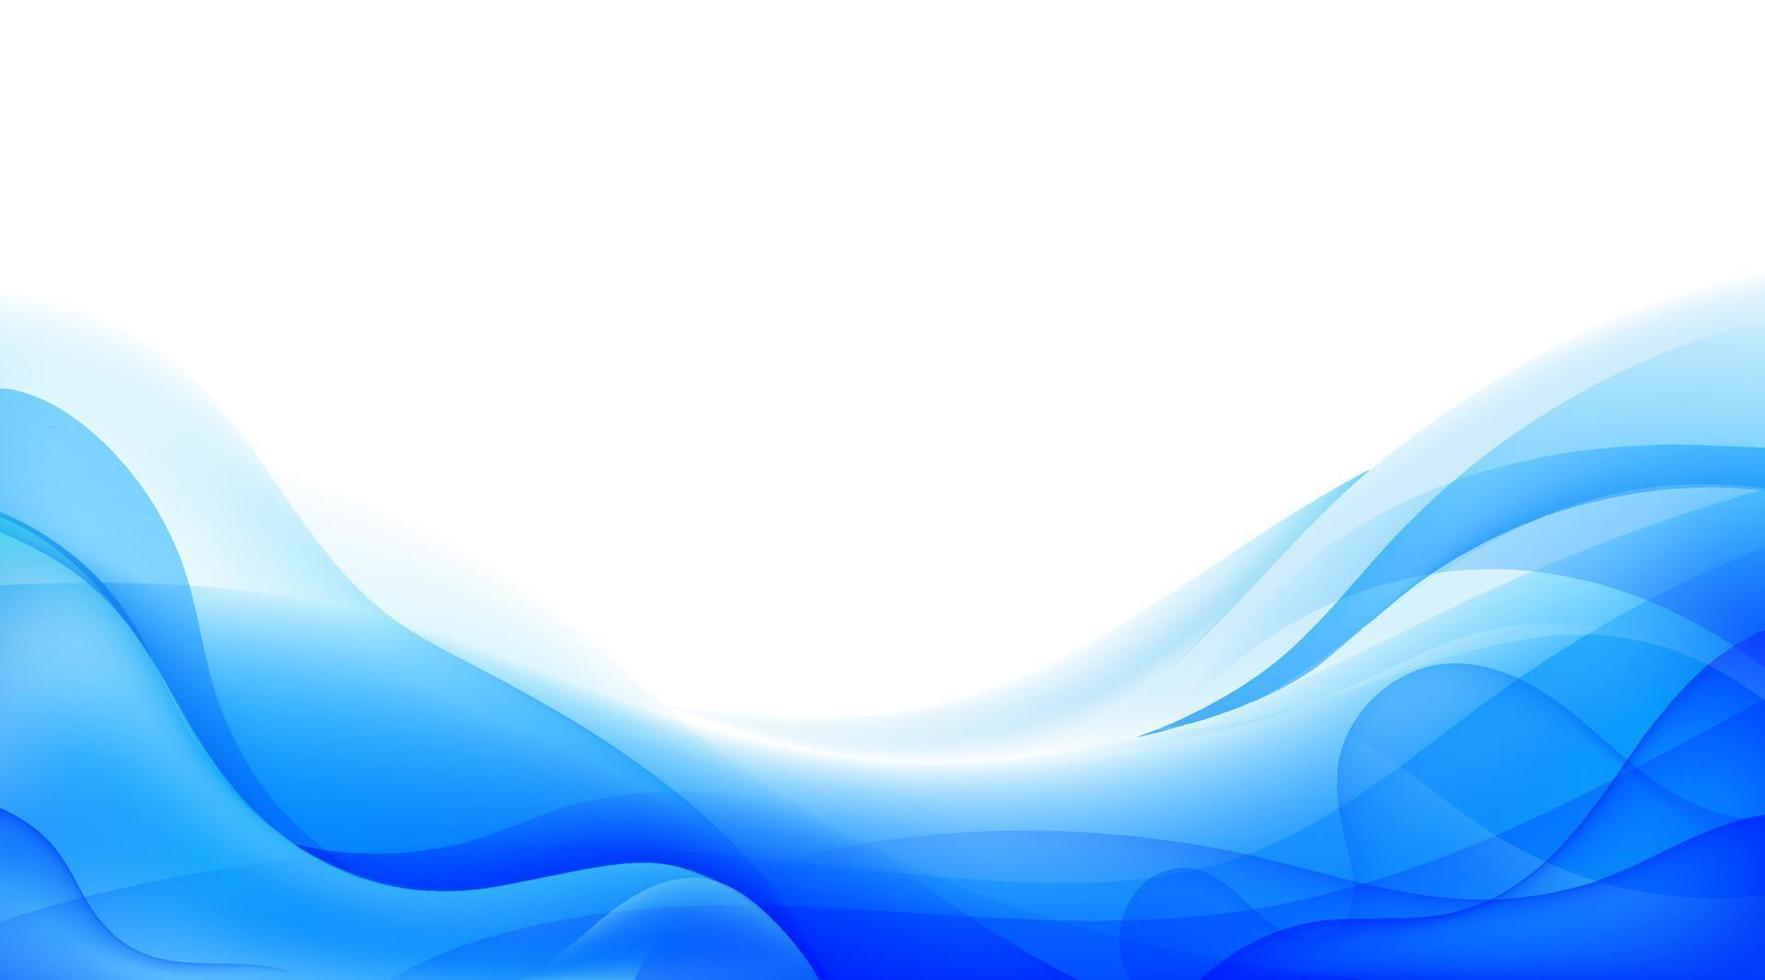 vector fundo geométrico abstrato ondulado, bandeira hoizontal de fluxo azul. composição de formas gradientes na moda.